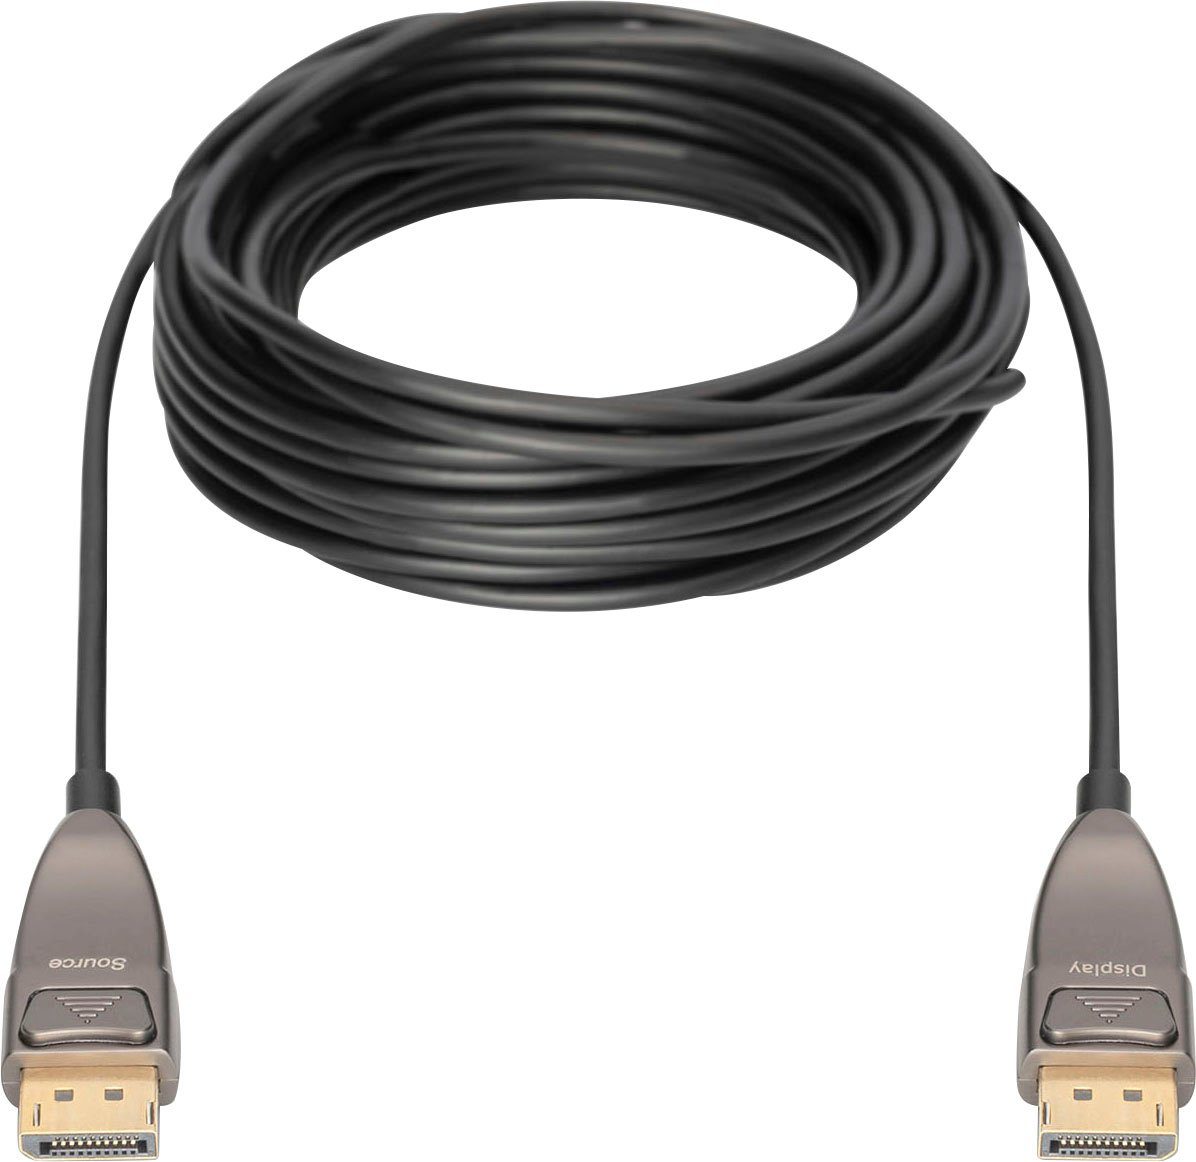 8K UHD SAT-Kabel, cm) Glasfaserkabel, (1500 AOC Digitus DisplayPort DisplayPort™ Hybrid